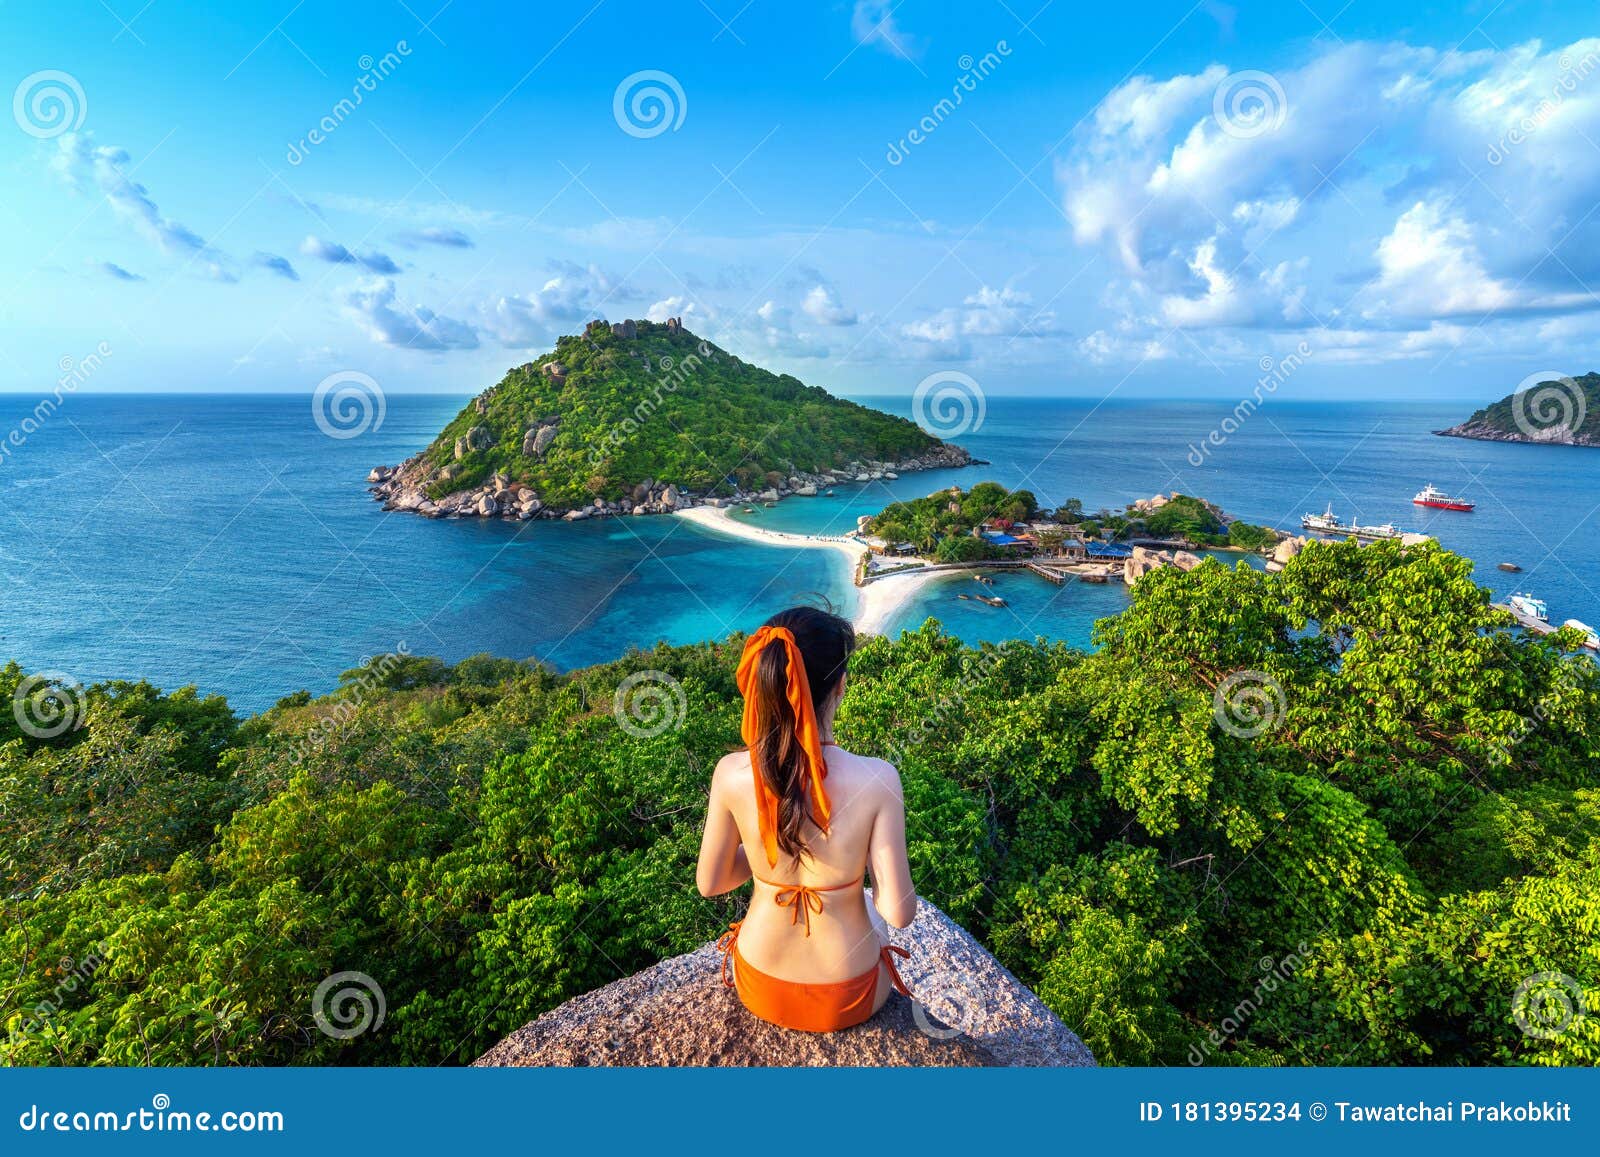 woman in bikini sitting at the viewpoint of nang yuan island, thailand